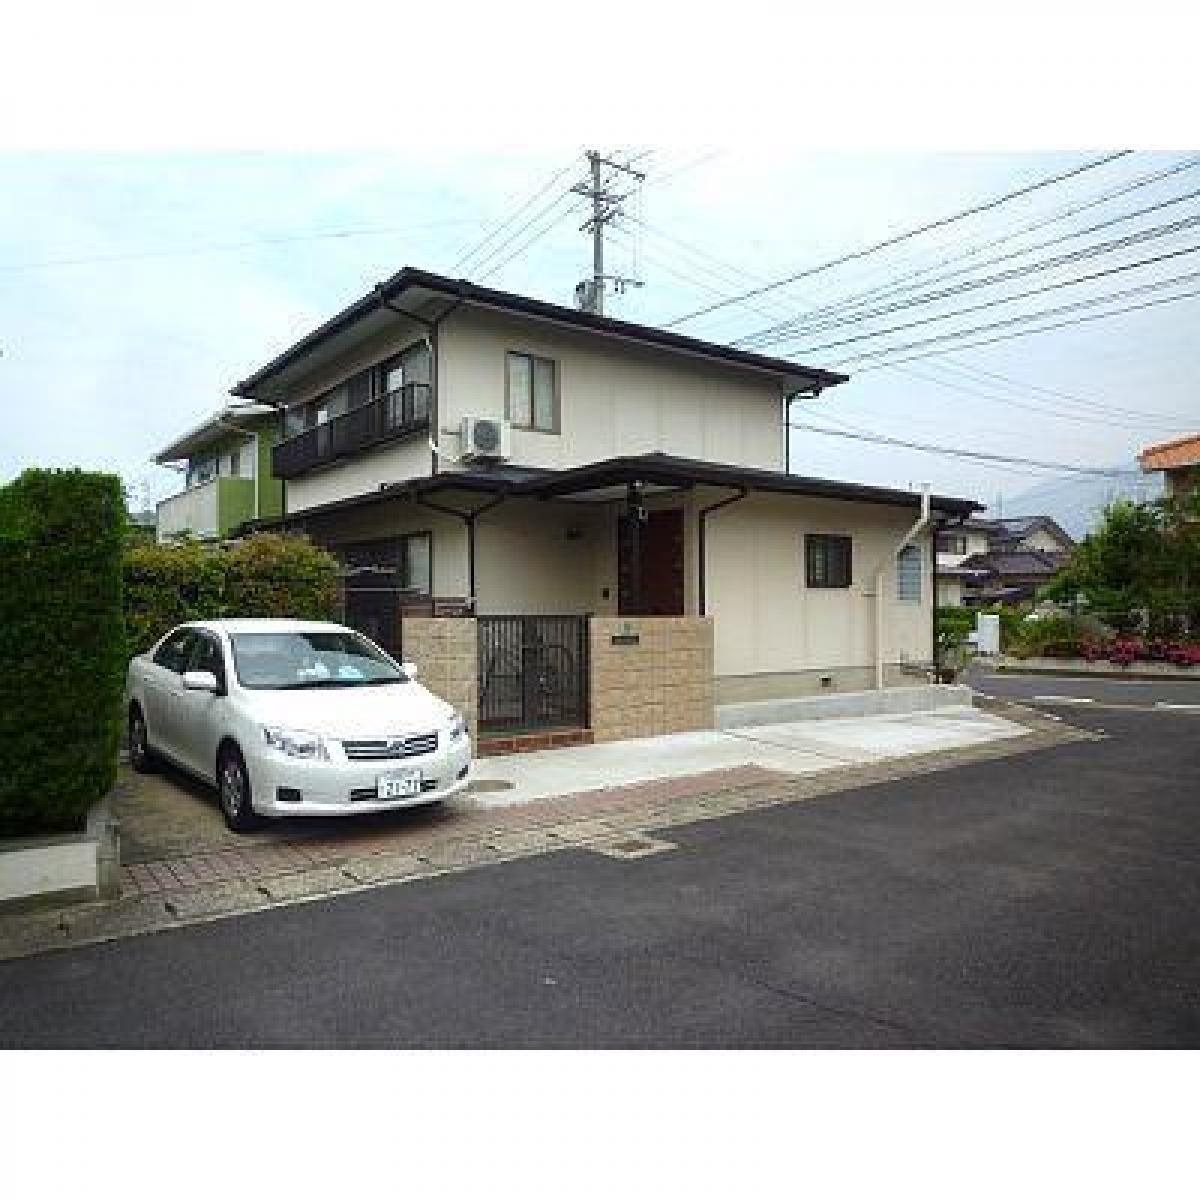 Picture of Home For Sale in Sasebo Shi, Nagasaki, Japan